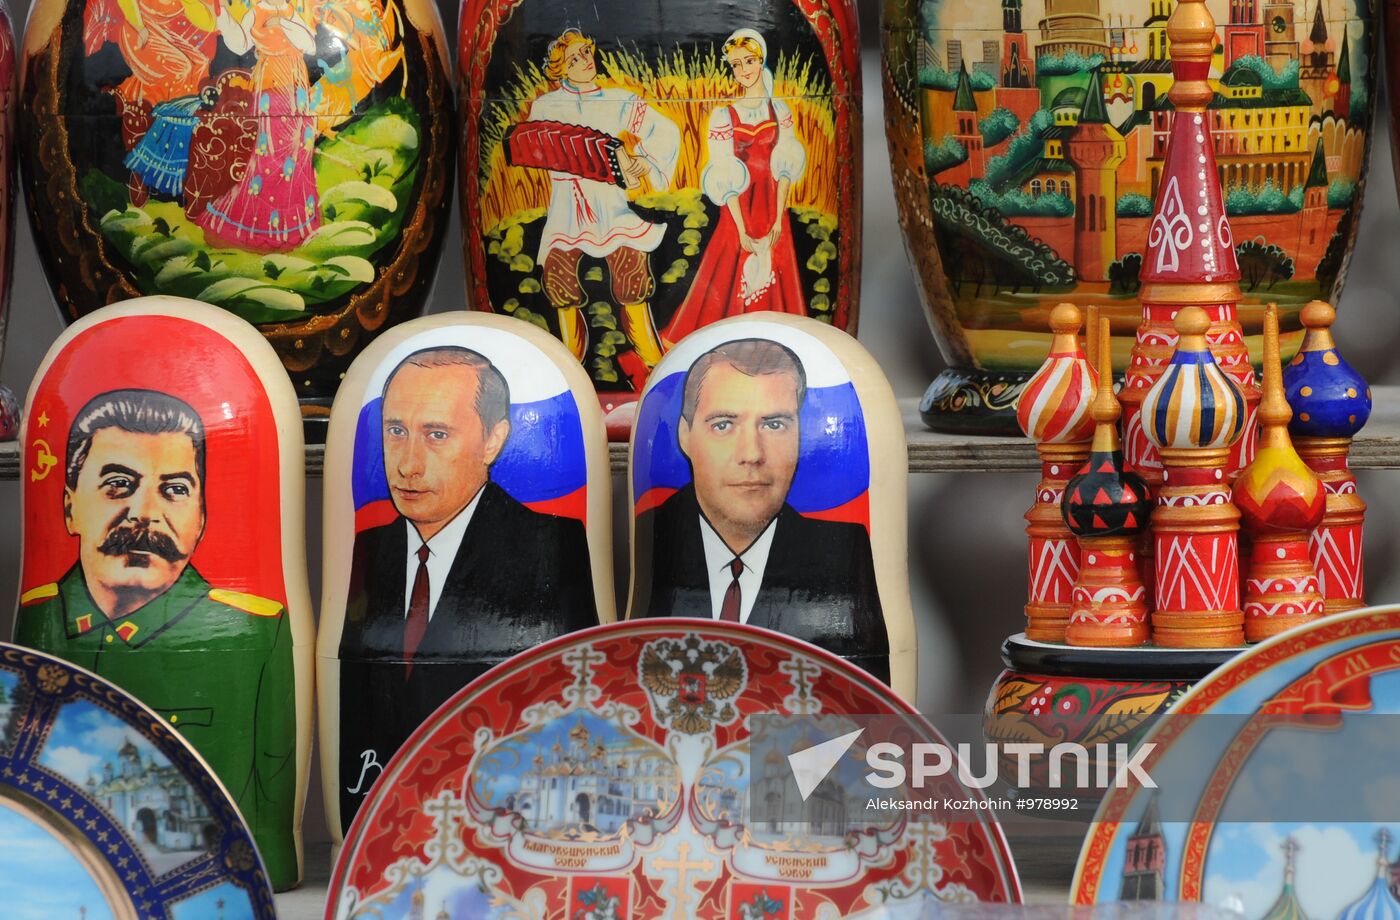 Matrioshka dolls with portraits of V. Putin and D. Medvedev